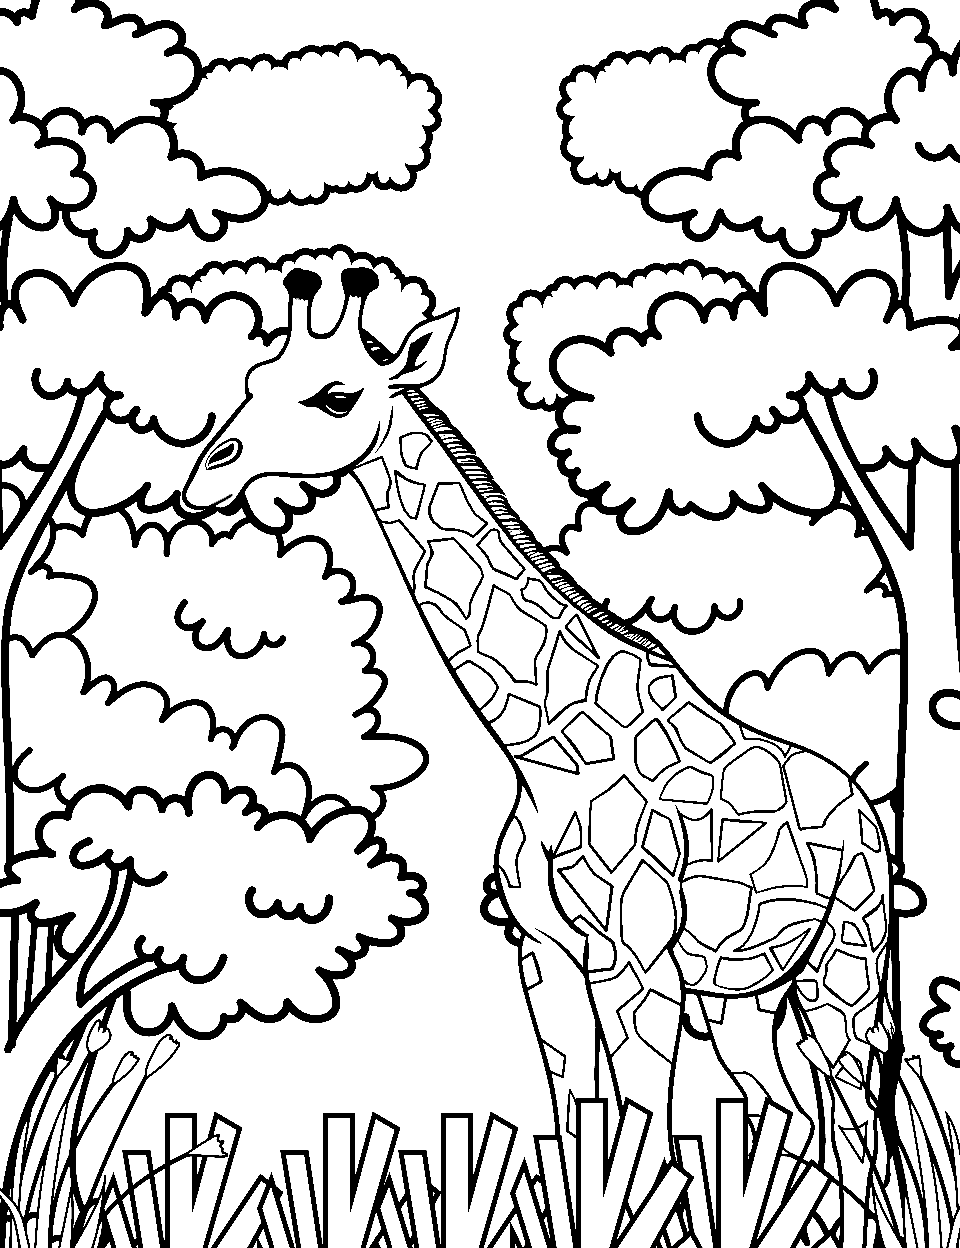 Jungle Explorer Giraffe Coloring Page - A giraffe navigating through the dense bushes of the jungle.